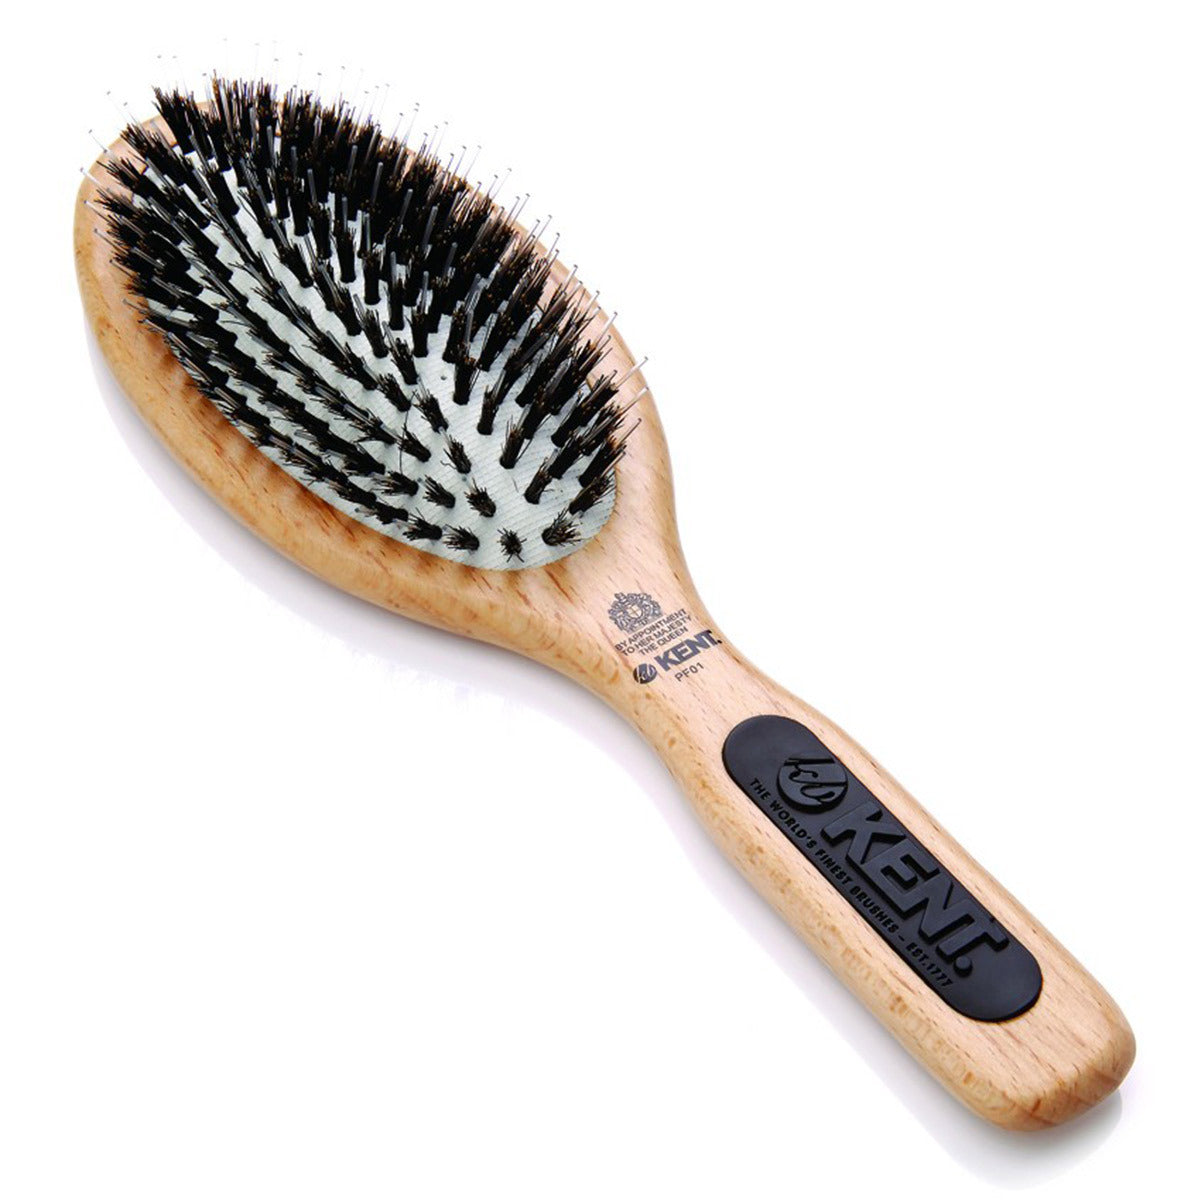 Primary image of Natural Shine Large Porcupine + Bristle Hairbrush - PF01